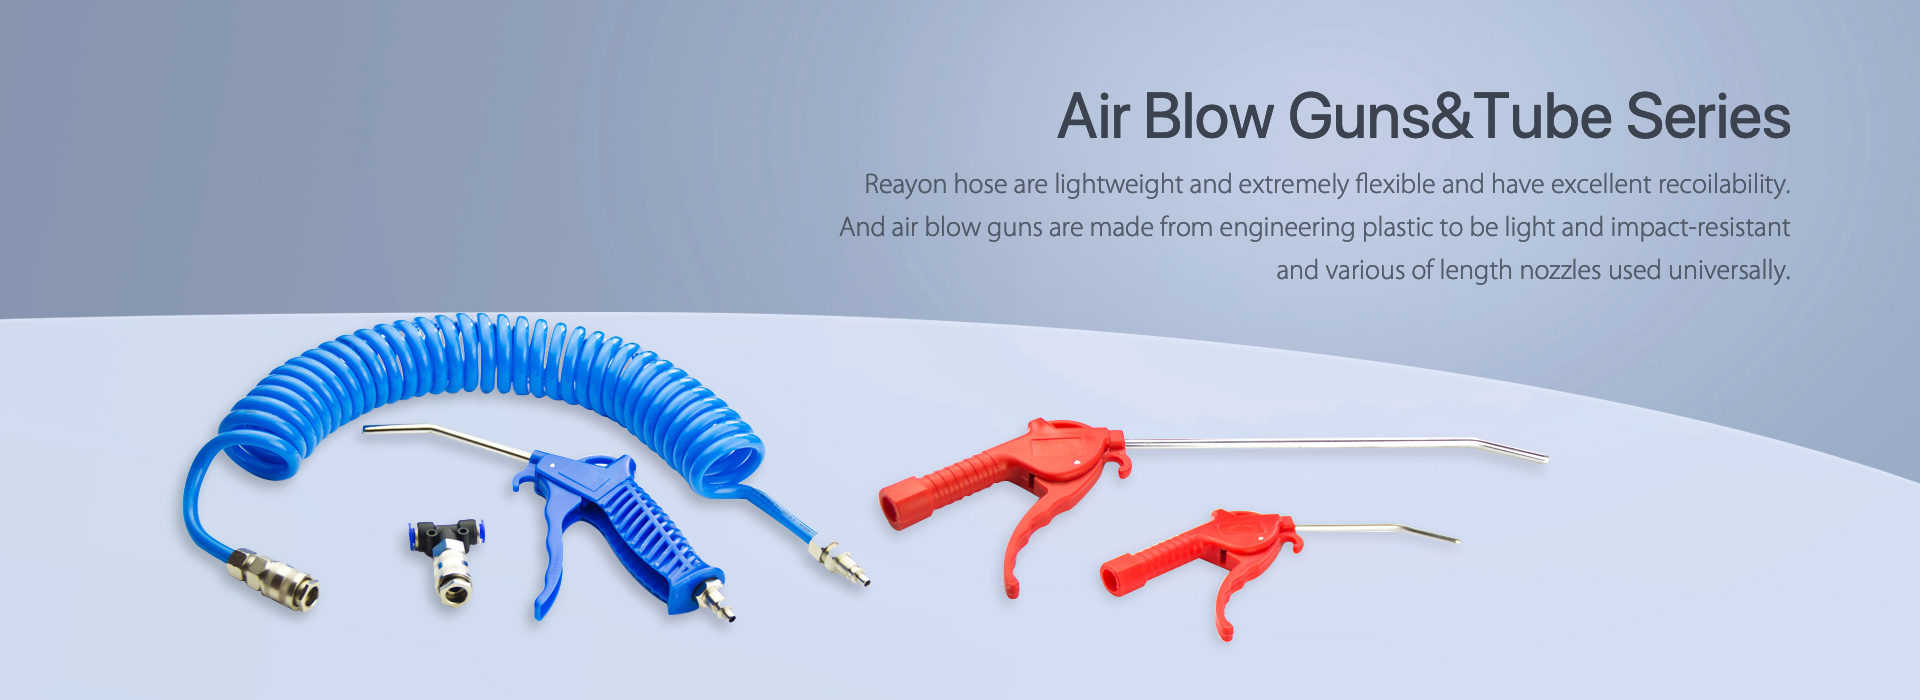 Air-Blow-GunsTube-Sreath